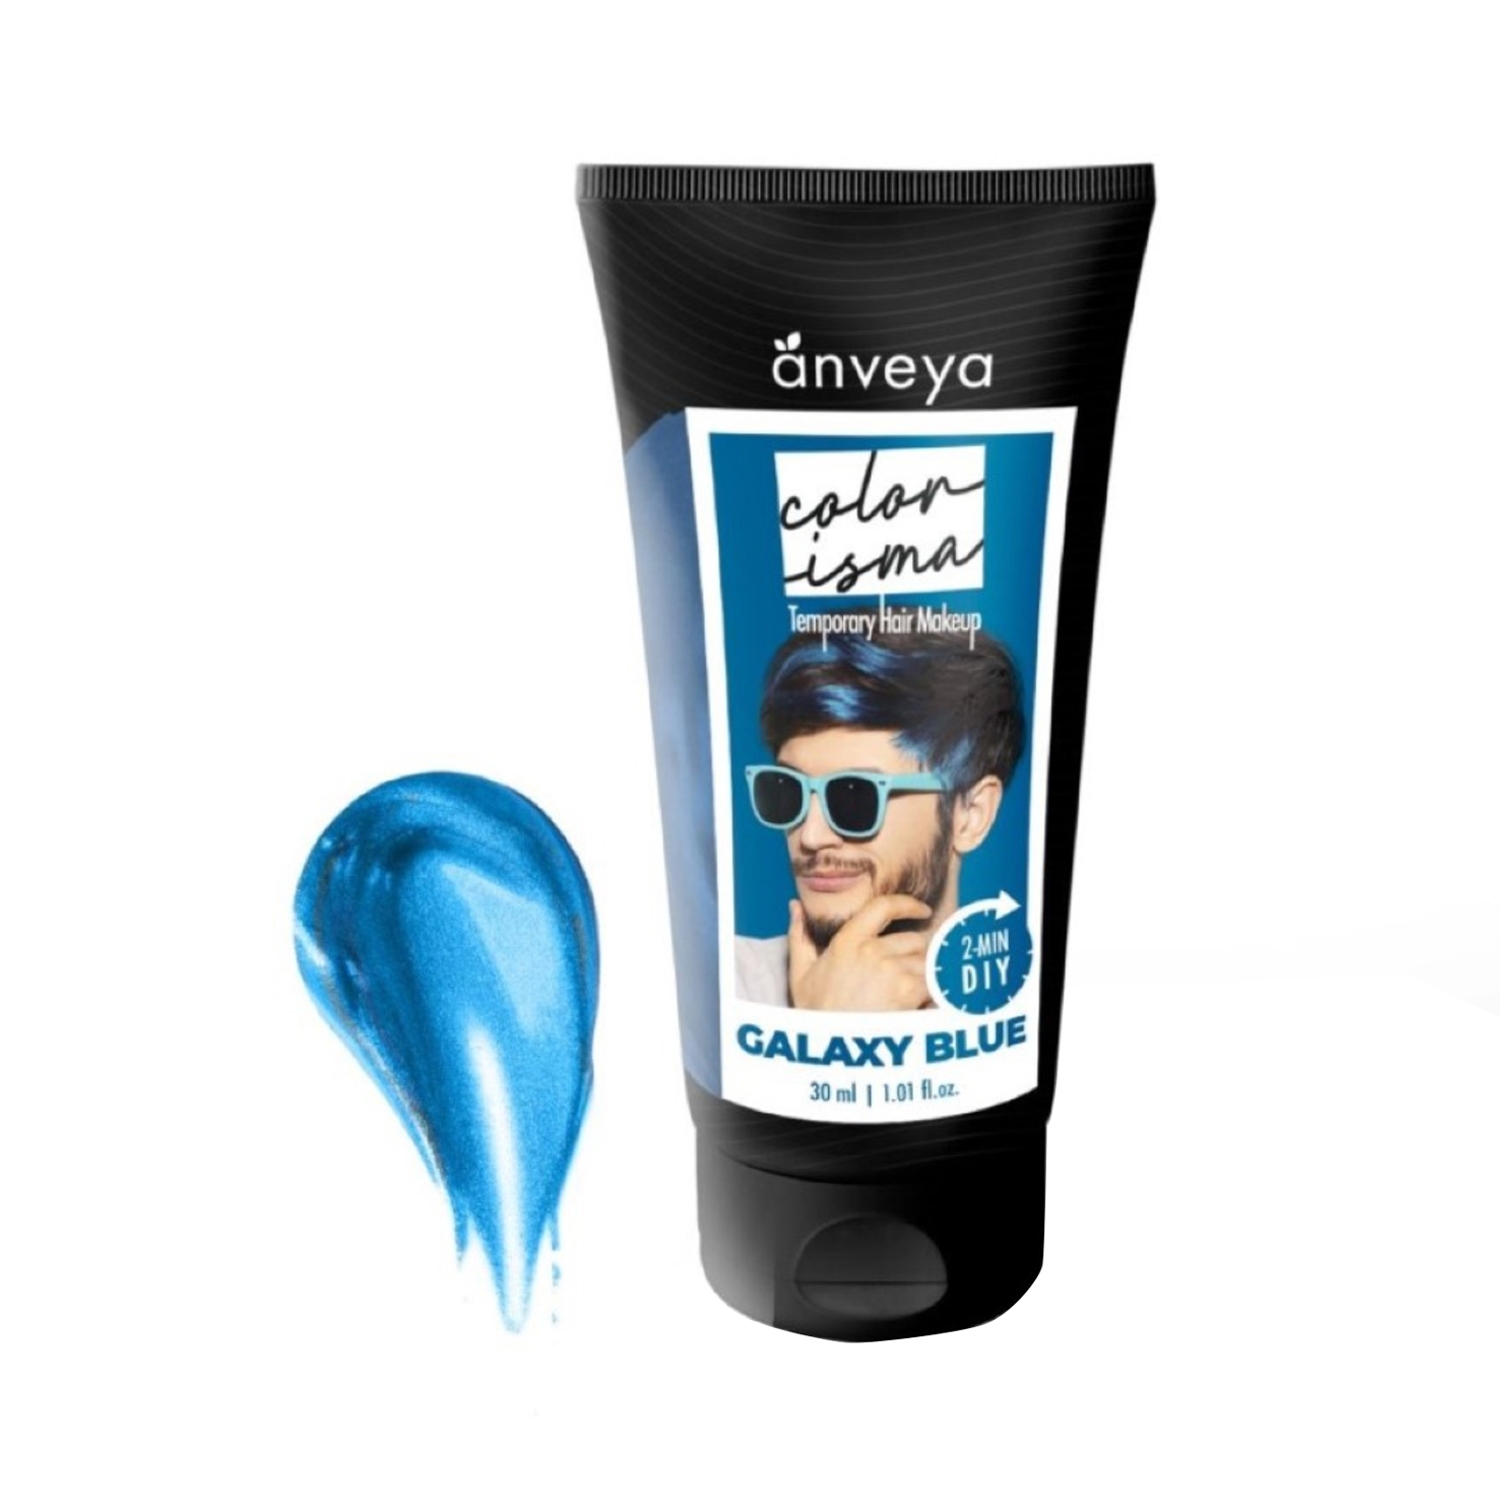 Anveya Colorisma Hair Color Makeup - Galaxy Blue (30ml)